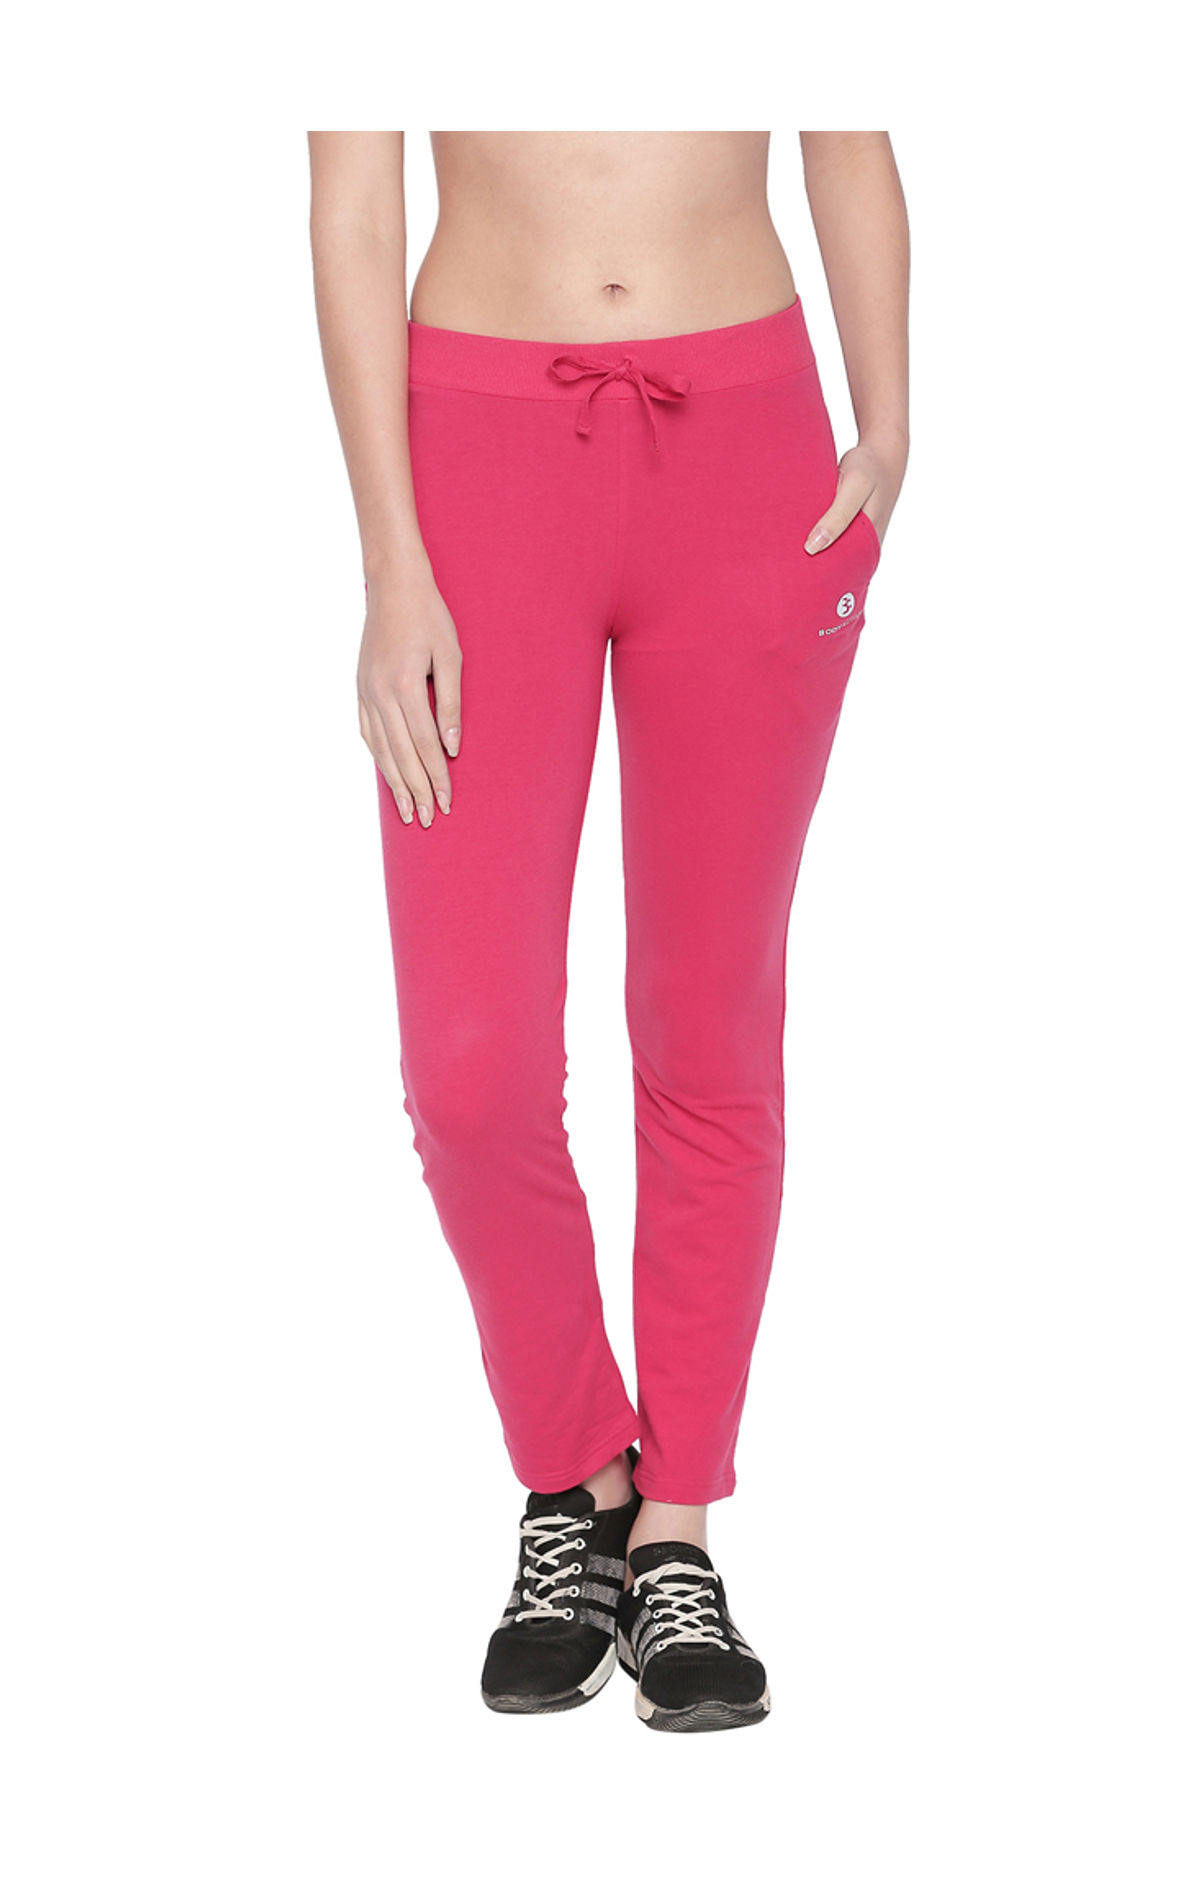 Cotton Track Pants For Women - Lavender, Women Track Pant, महिलाओं की ट्रैक  पैंट, लेडीज़ ट्रैक पैंट - Tanya Enterprises, Ludhiana | ID: 2852444426397